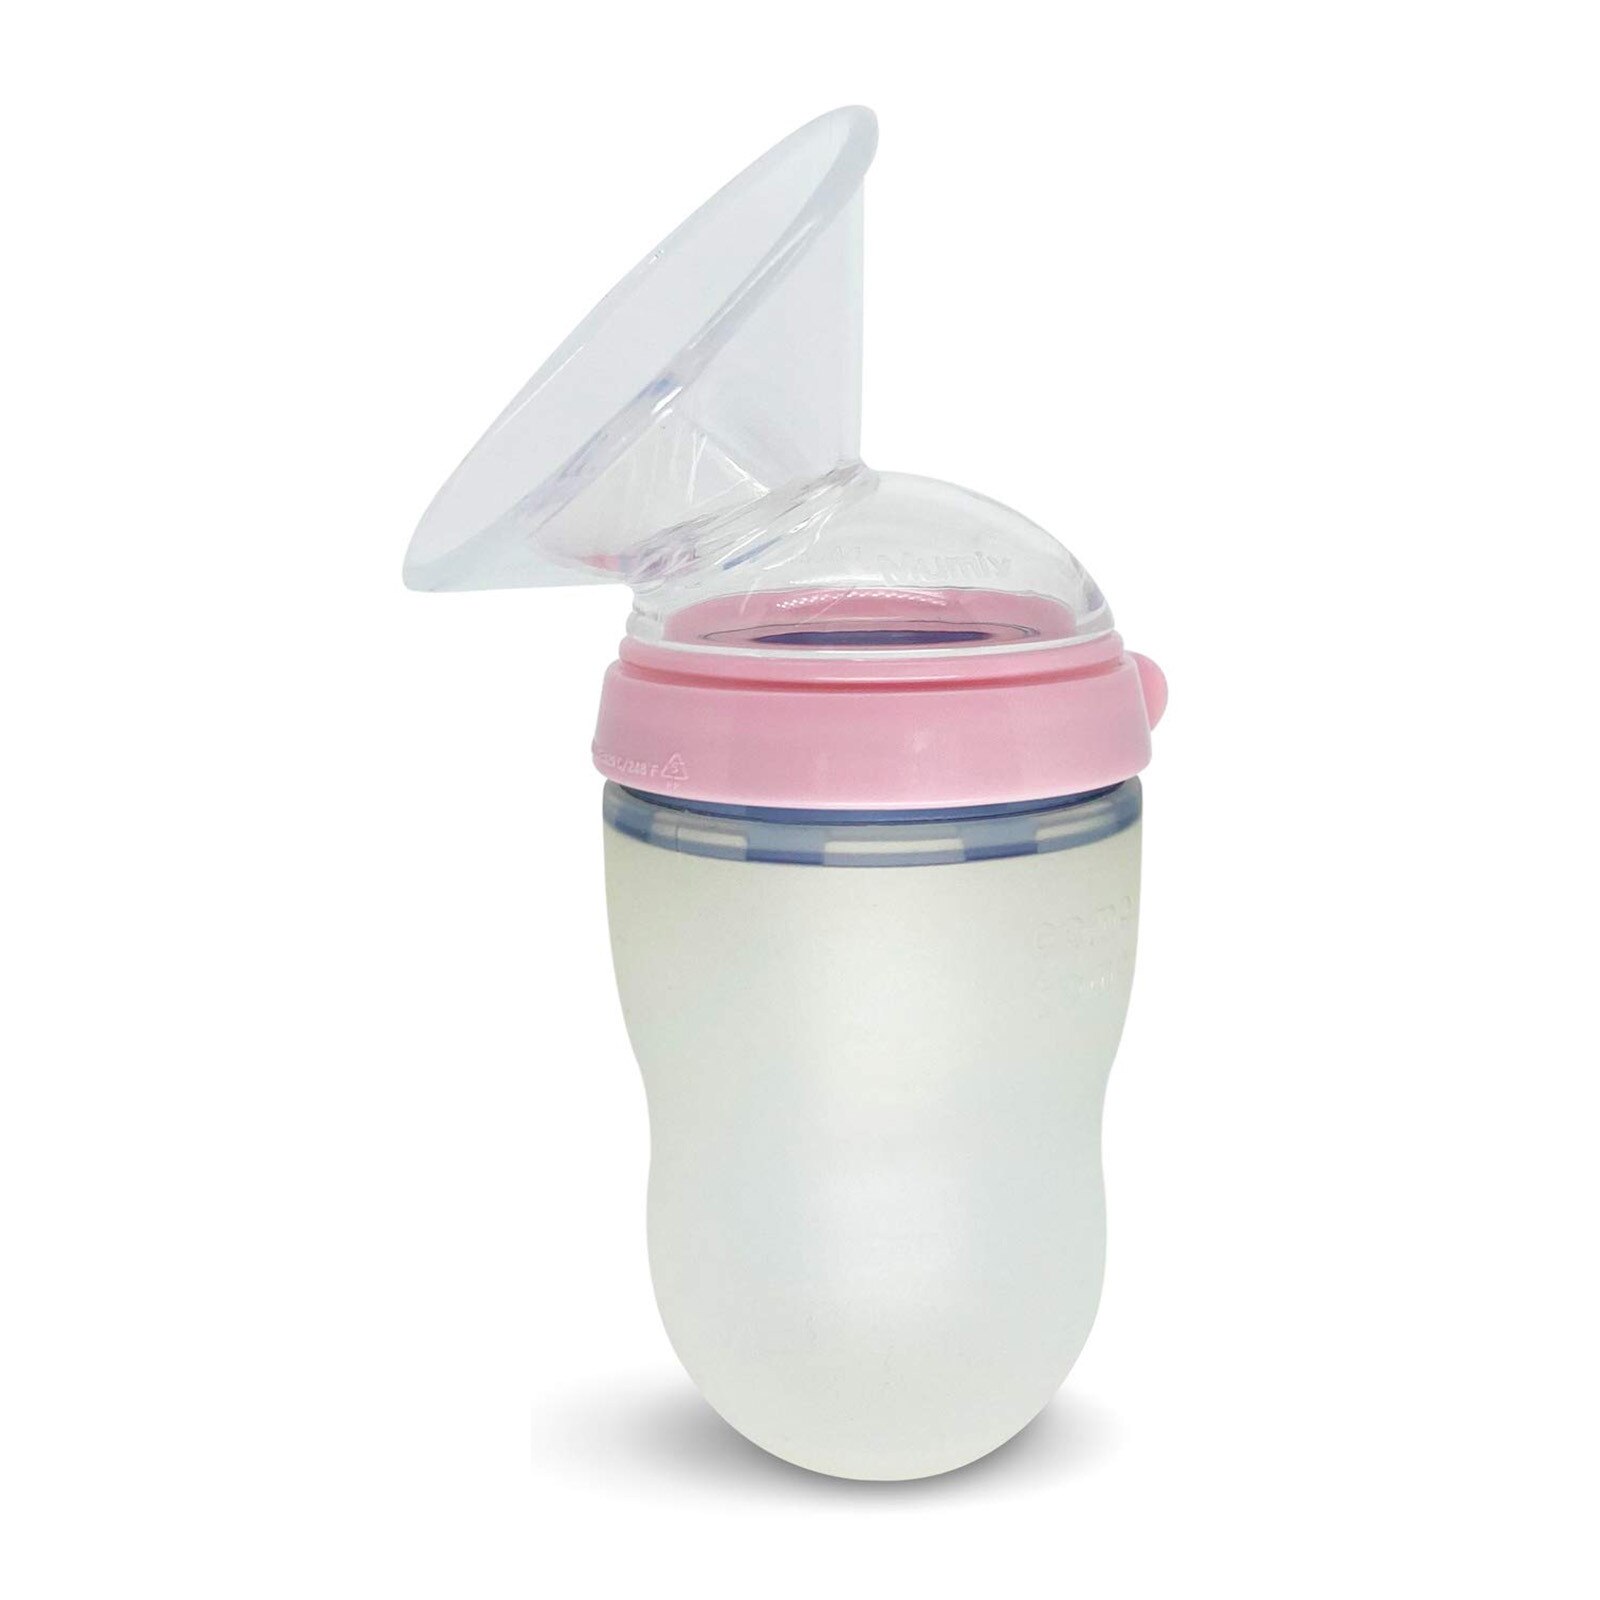 Silicone Manual Breast Pump Accessories Maternal Milk Collector Holder Baby Breastfeeding Bottle Puerperal Nursing Breast Pumps